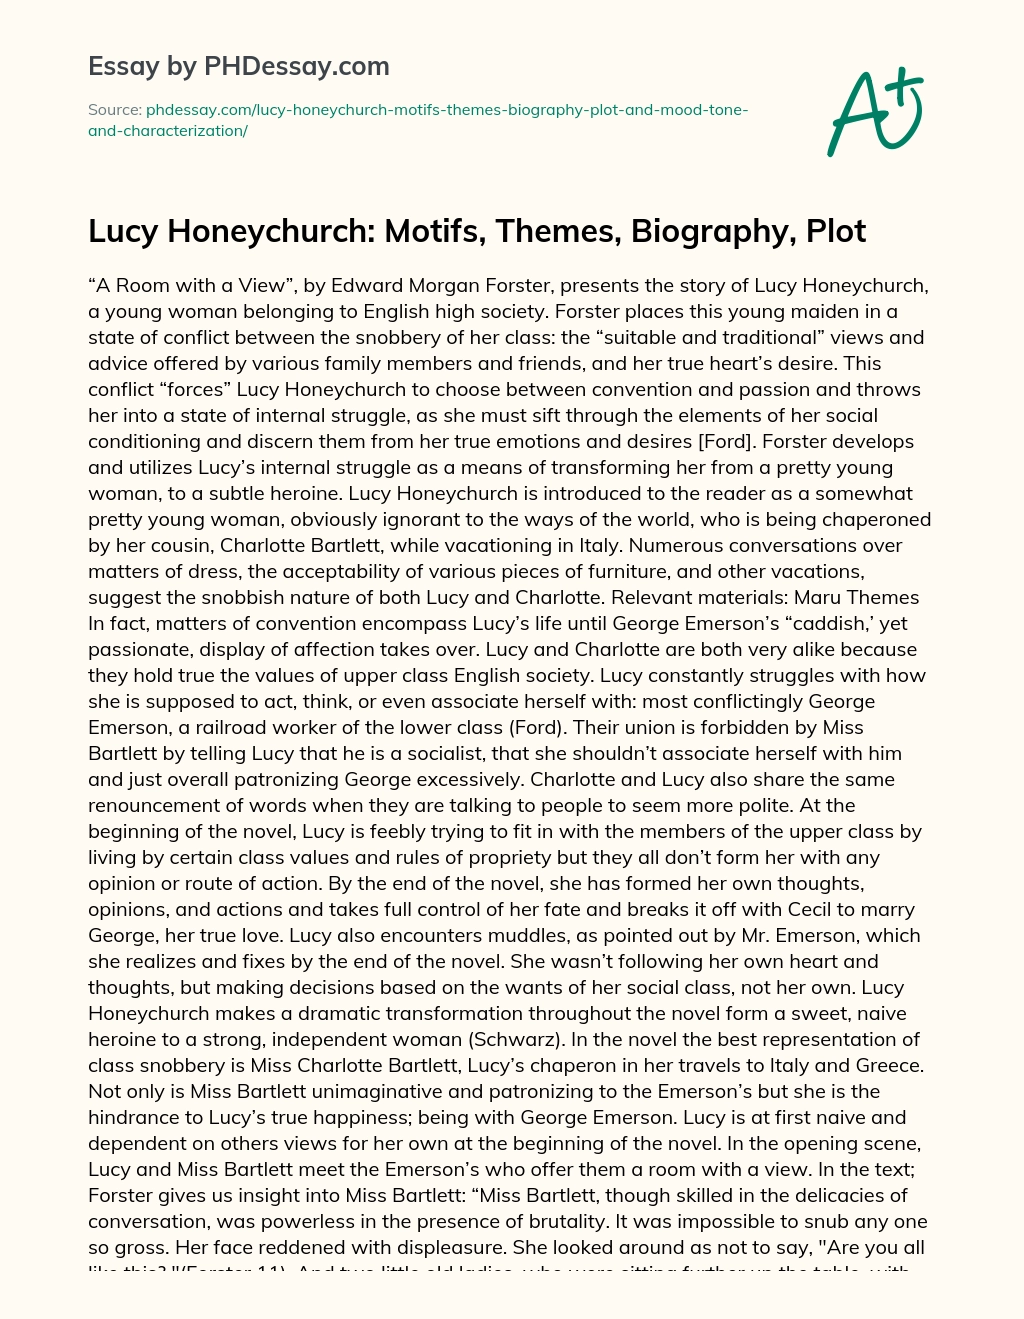 Lucy Honeychurch: Motifs, Themes, Biography, Plot essay